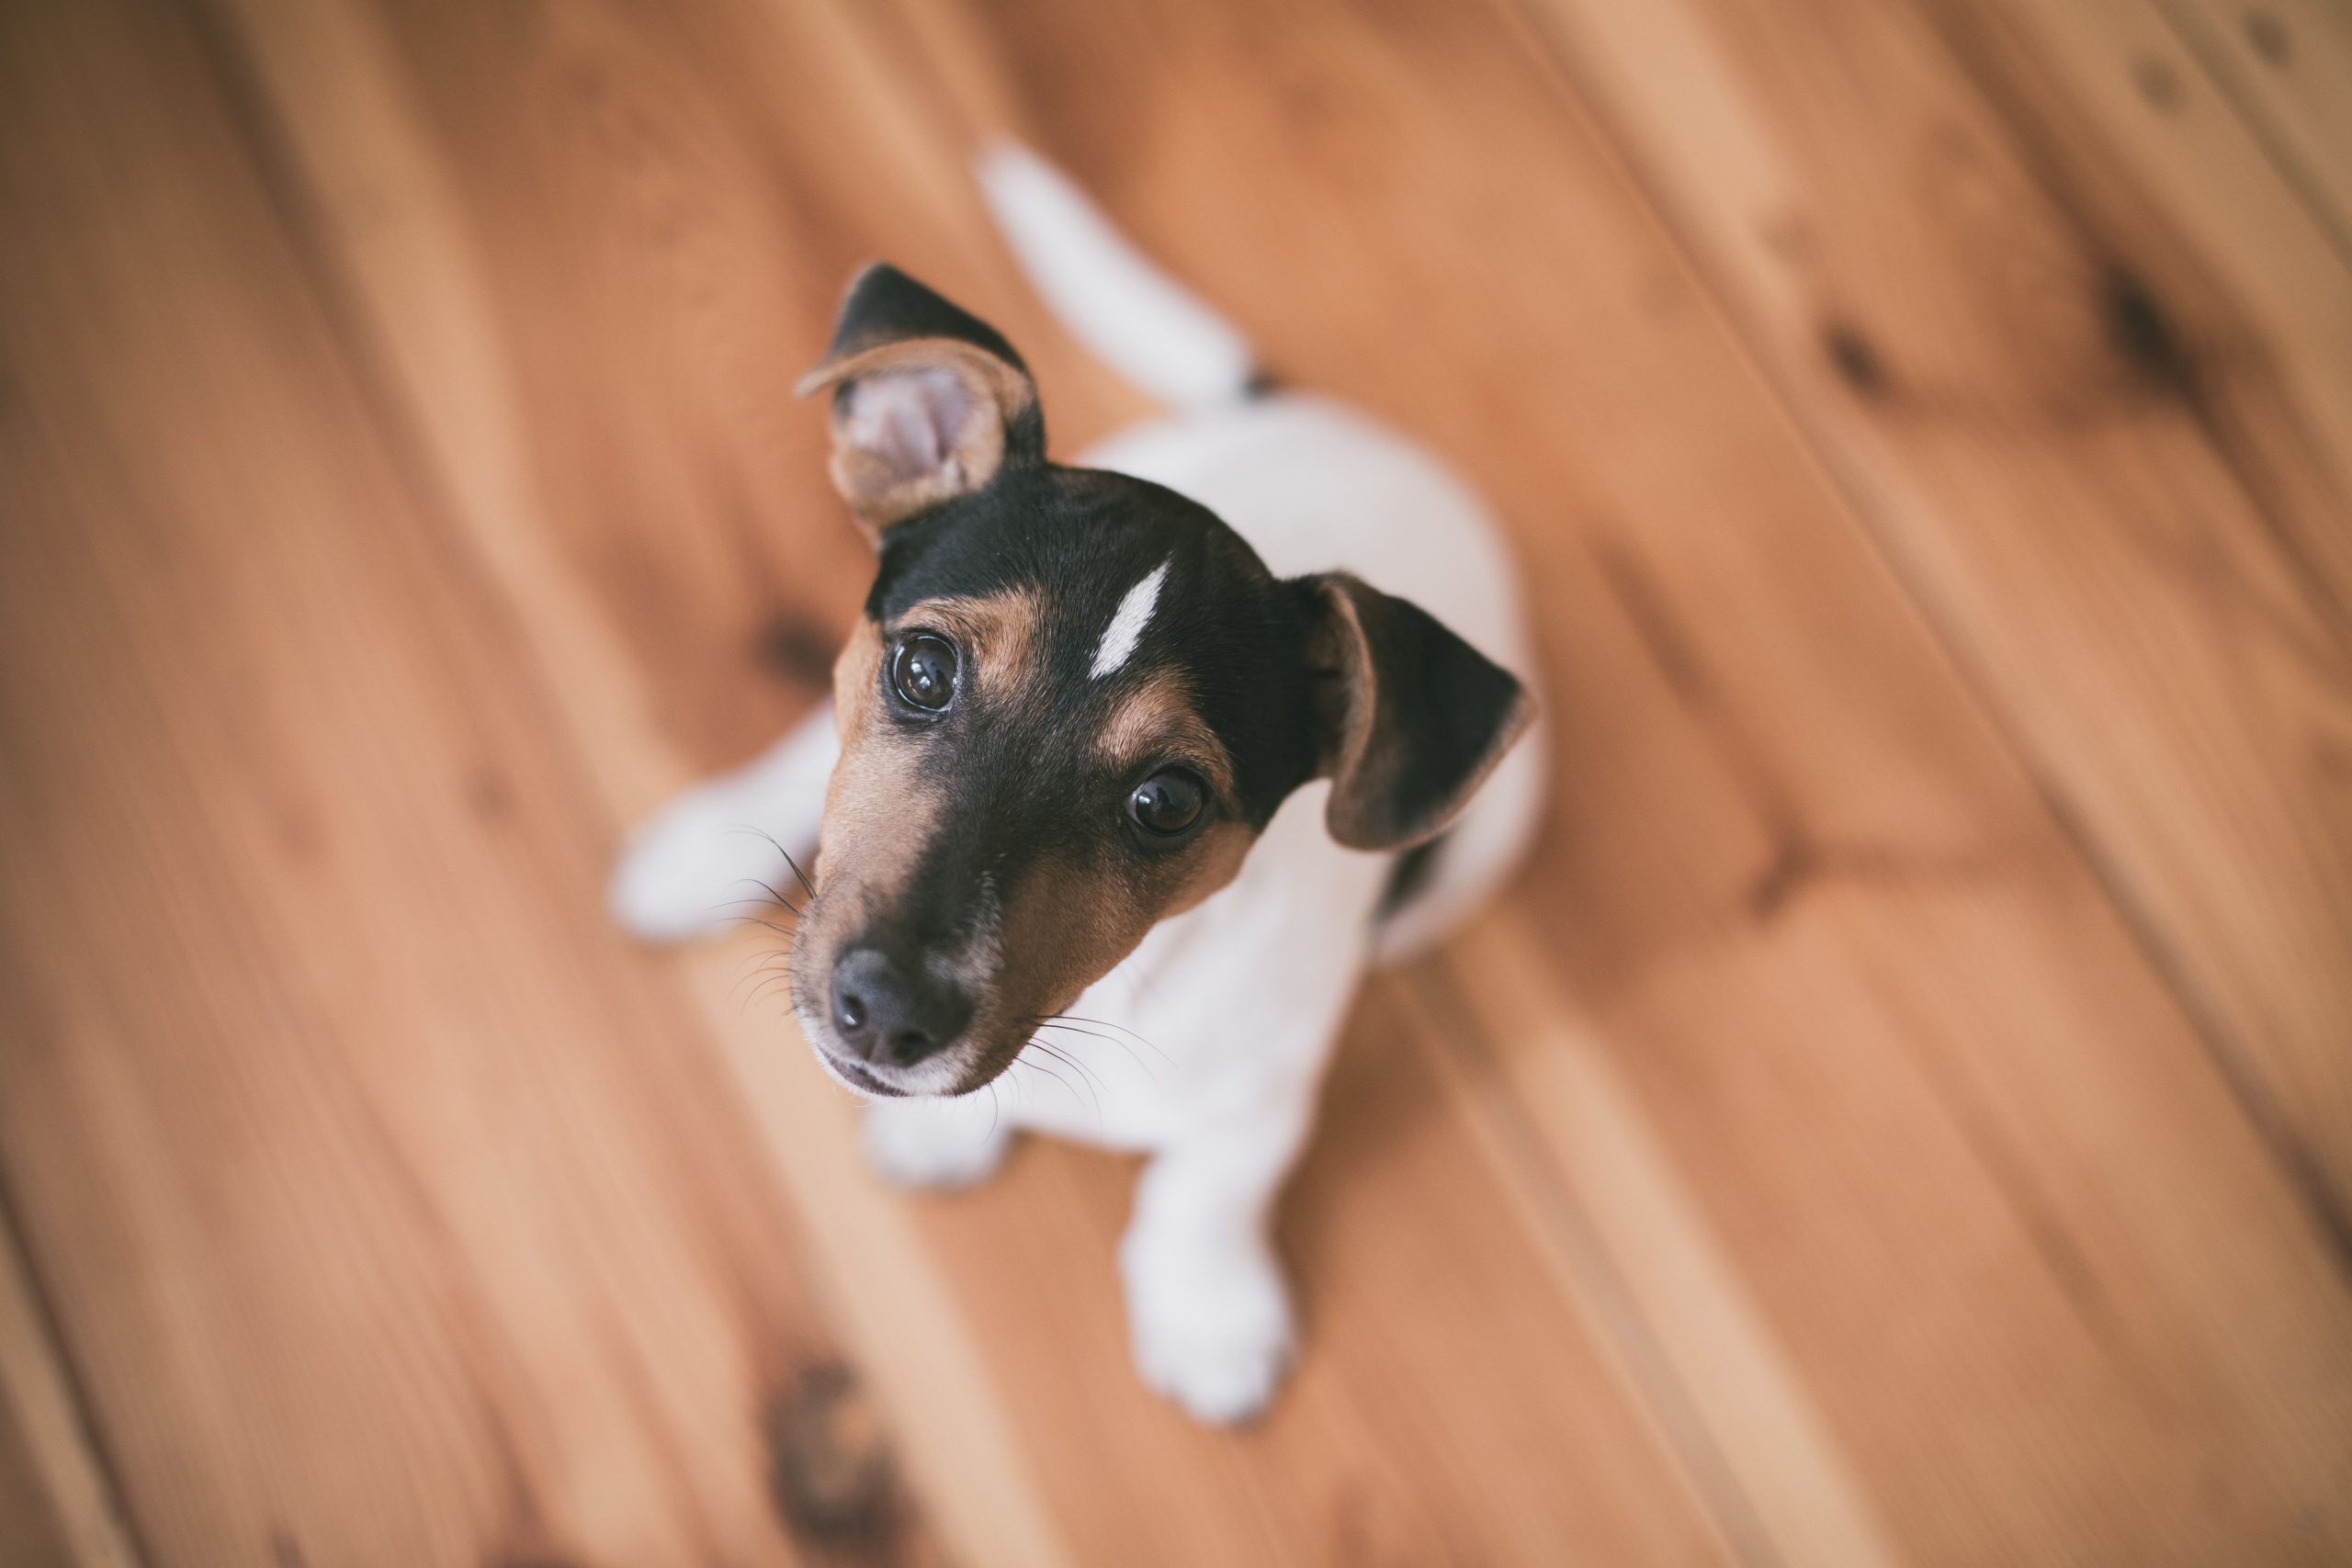 A cute dog on a wooden floor